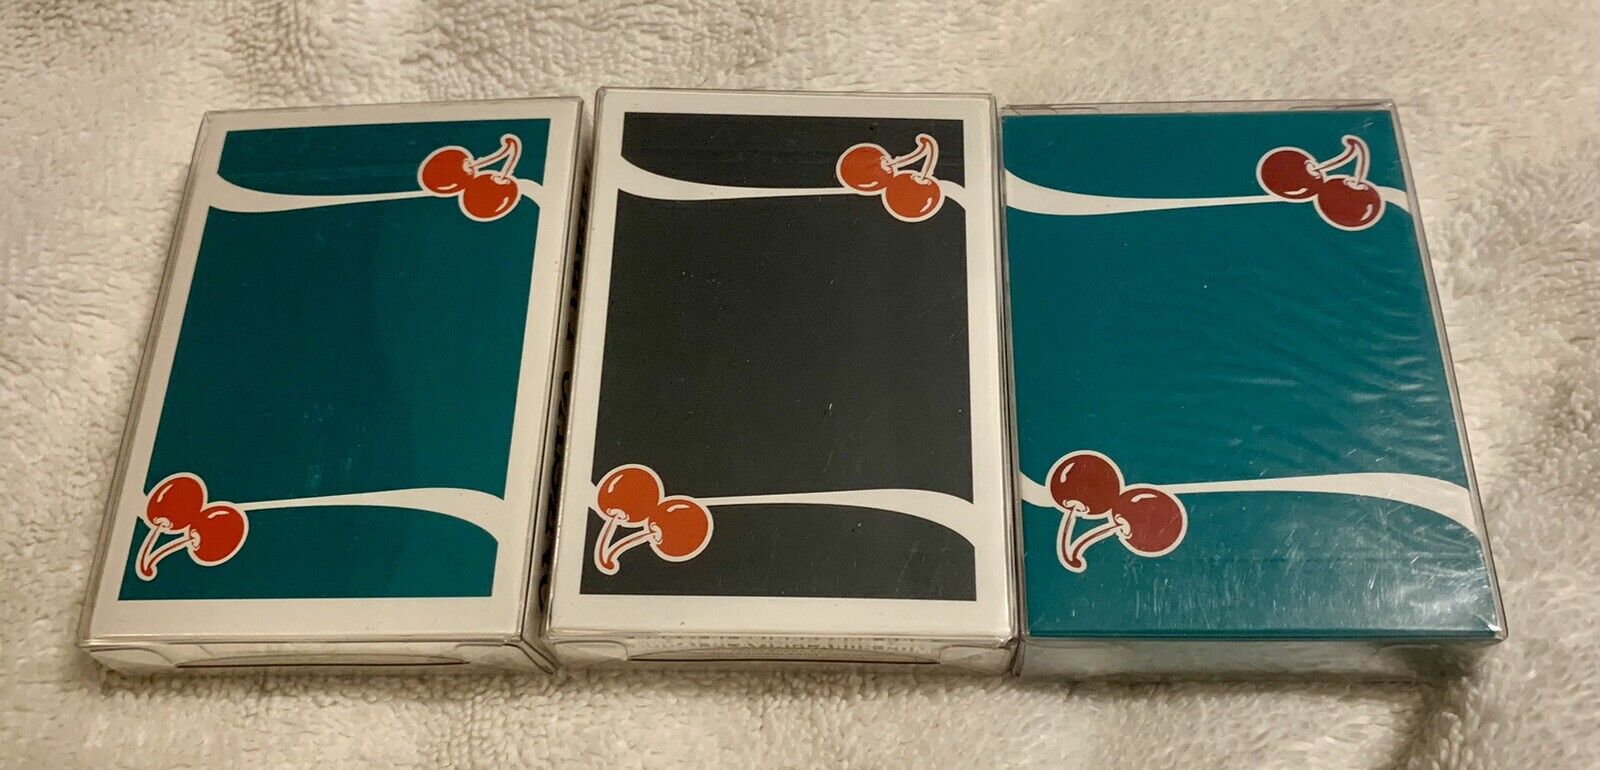 Cherry Casino Playing Cards - Set Of V1, V2, V3 - New and Unopened (three decks)